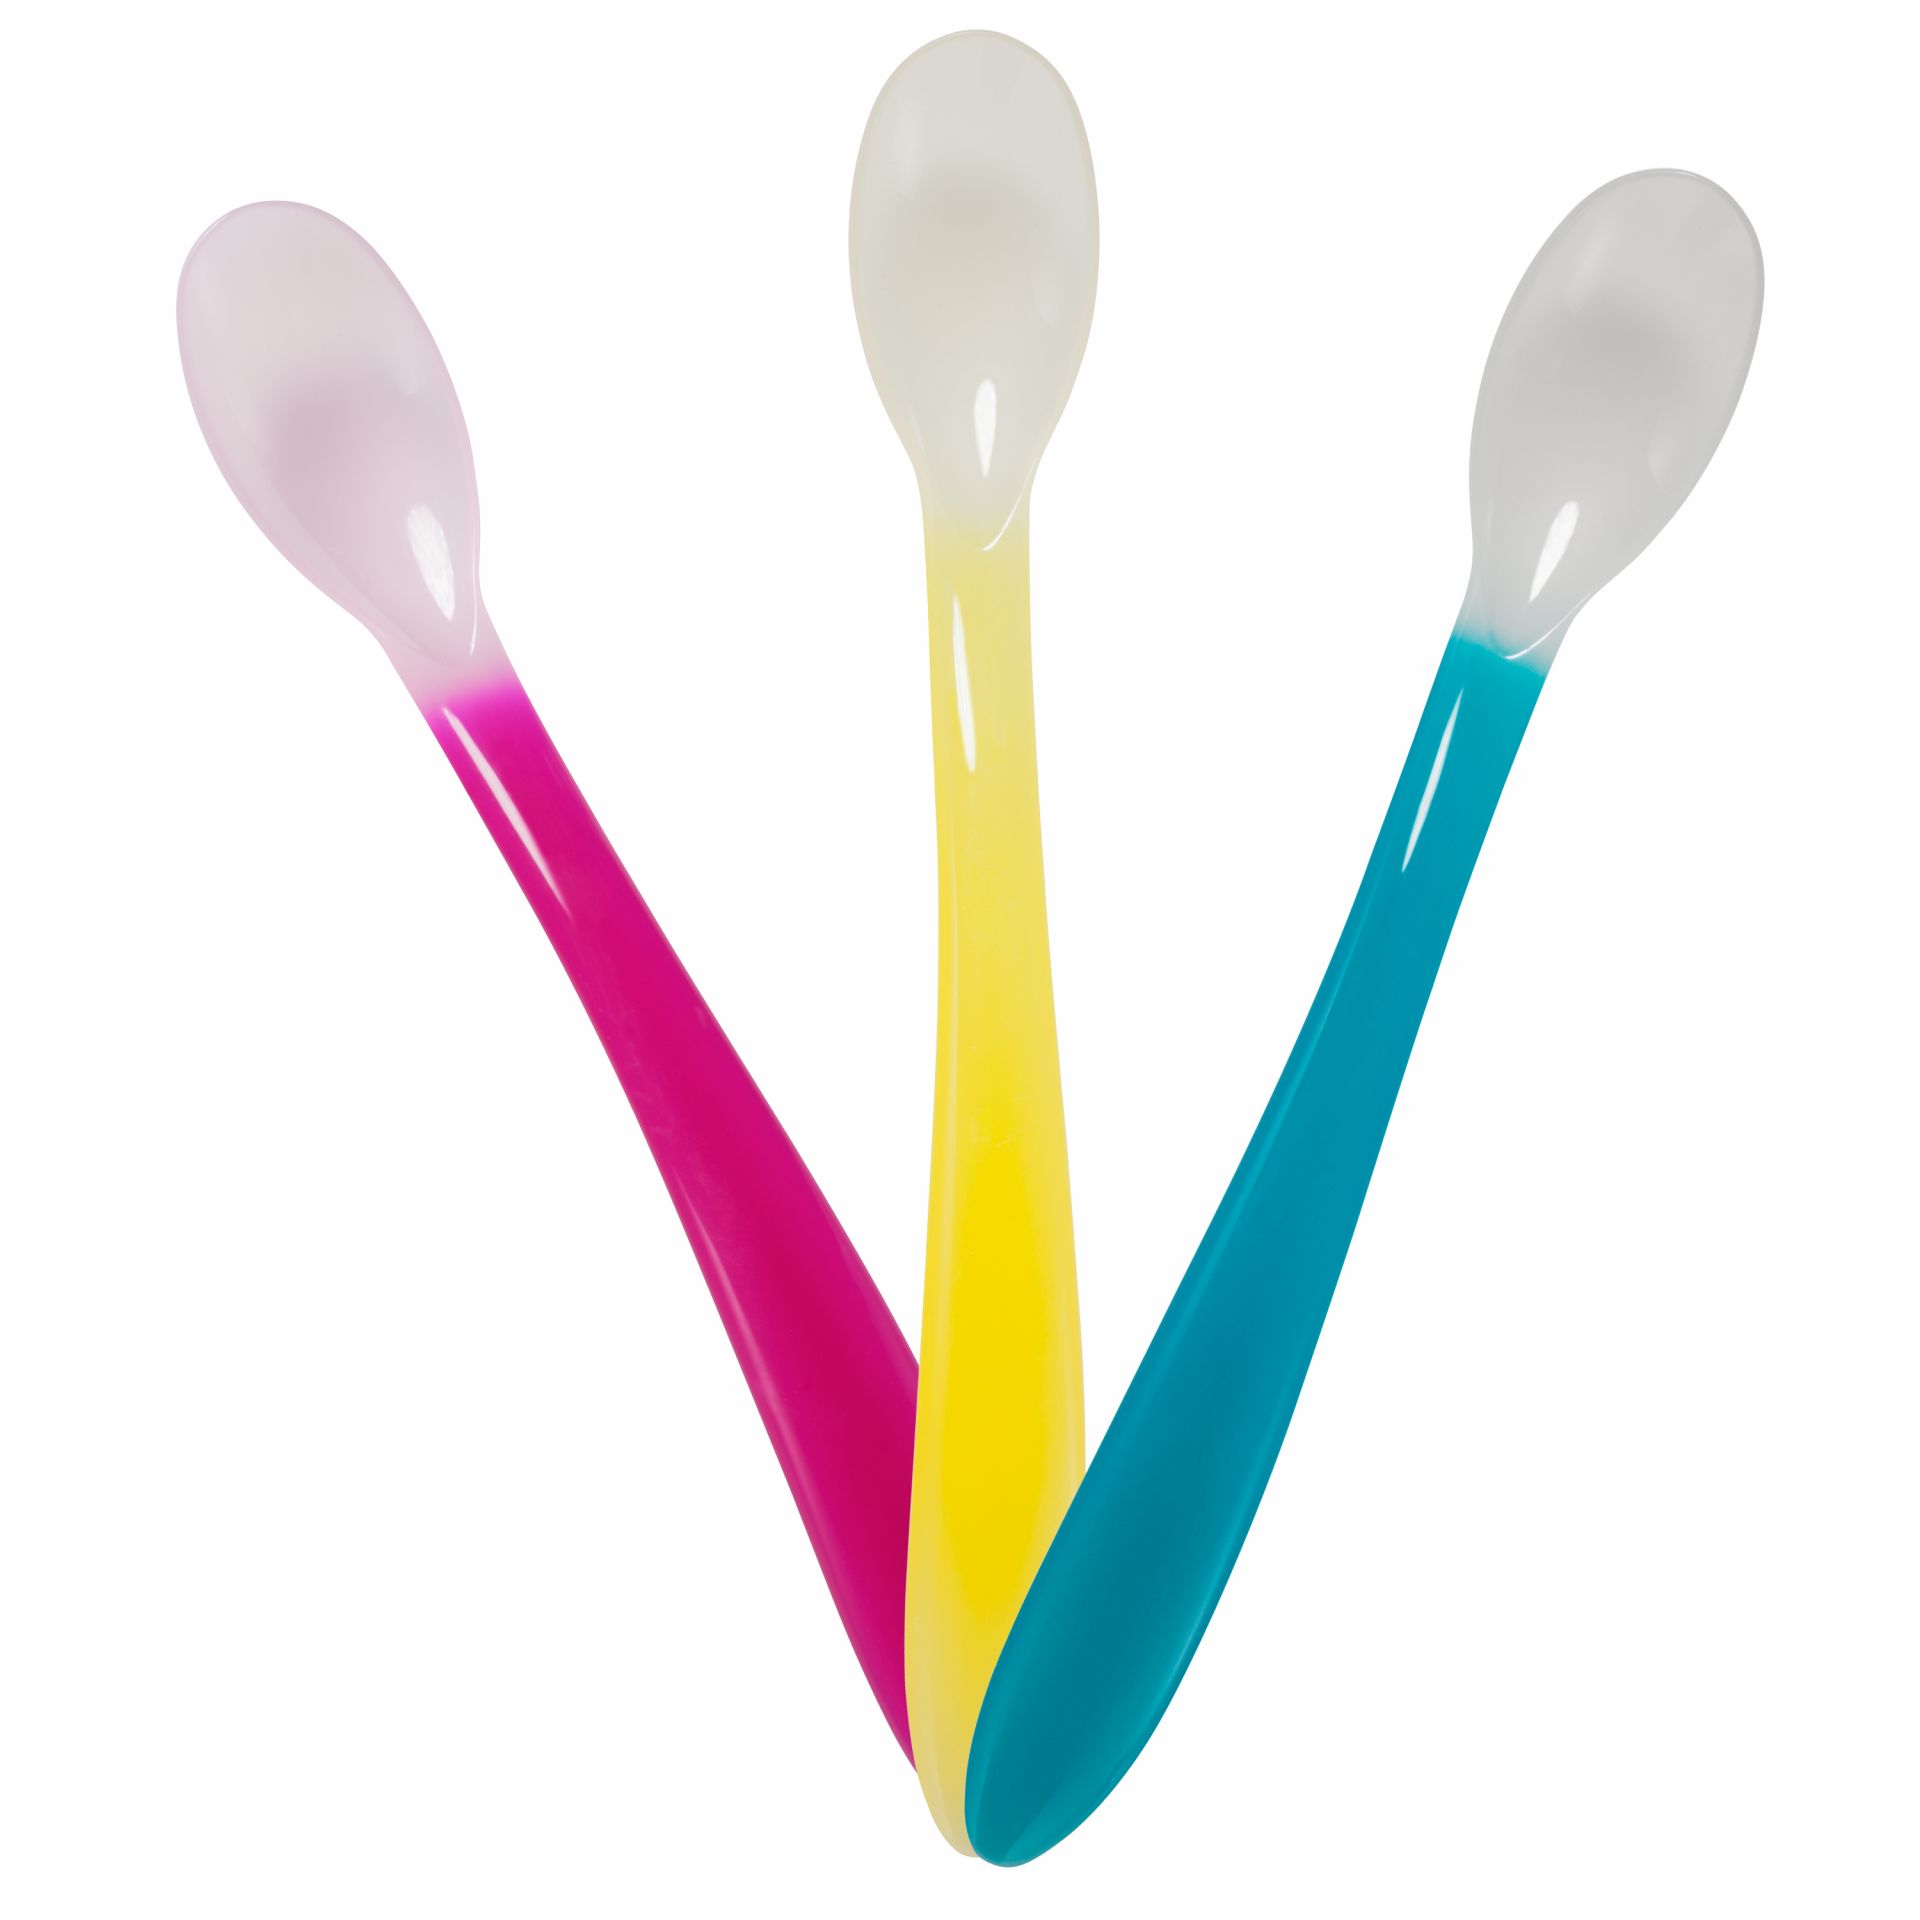 Set of 3 Heat sensitive spoon